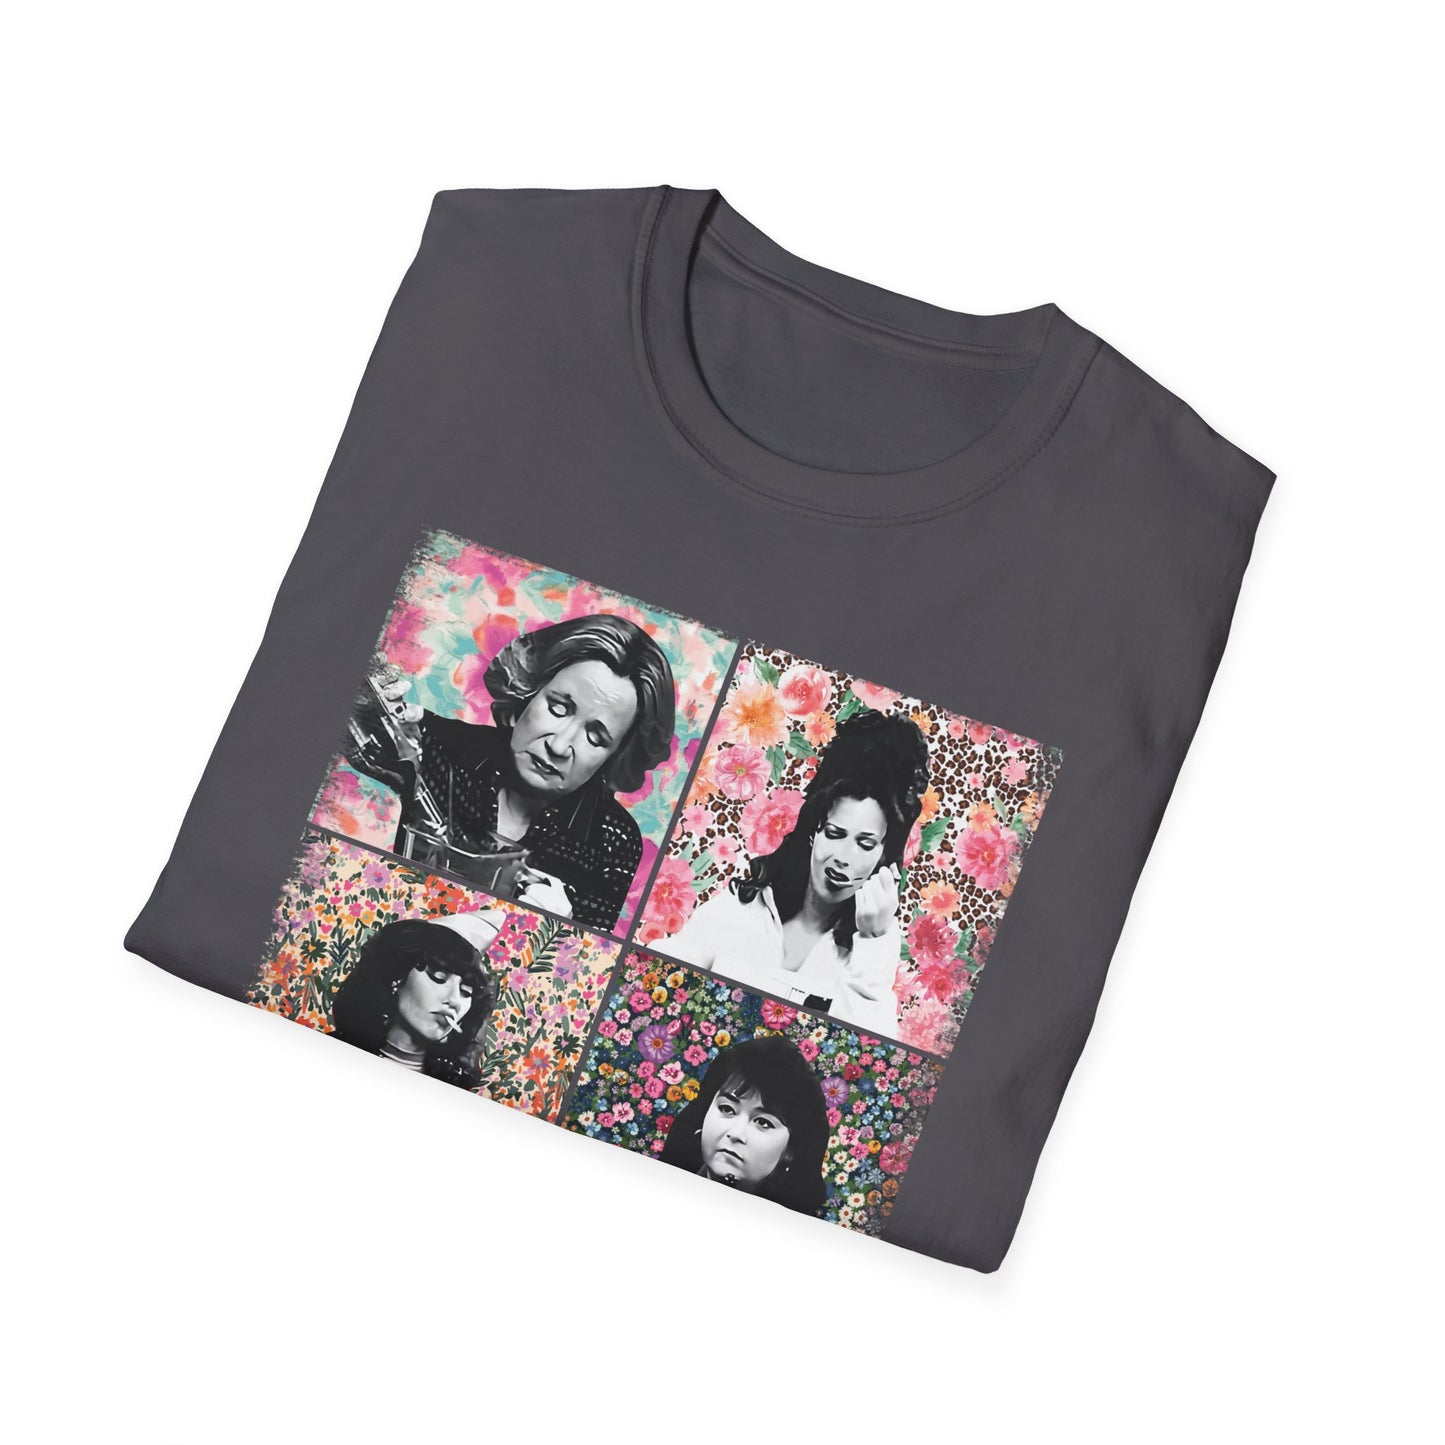 Mom Vibes - Unisex Softstyle T-Shirt